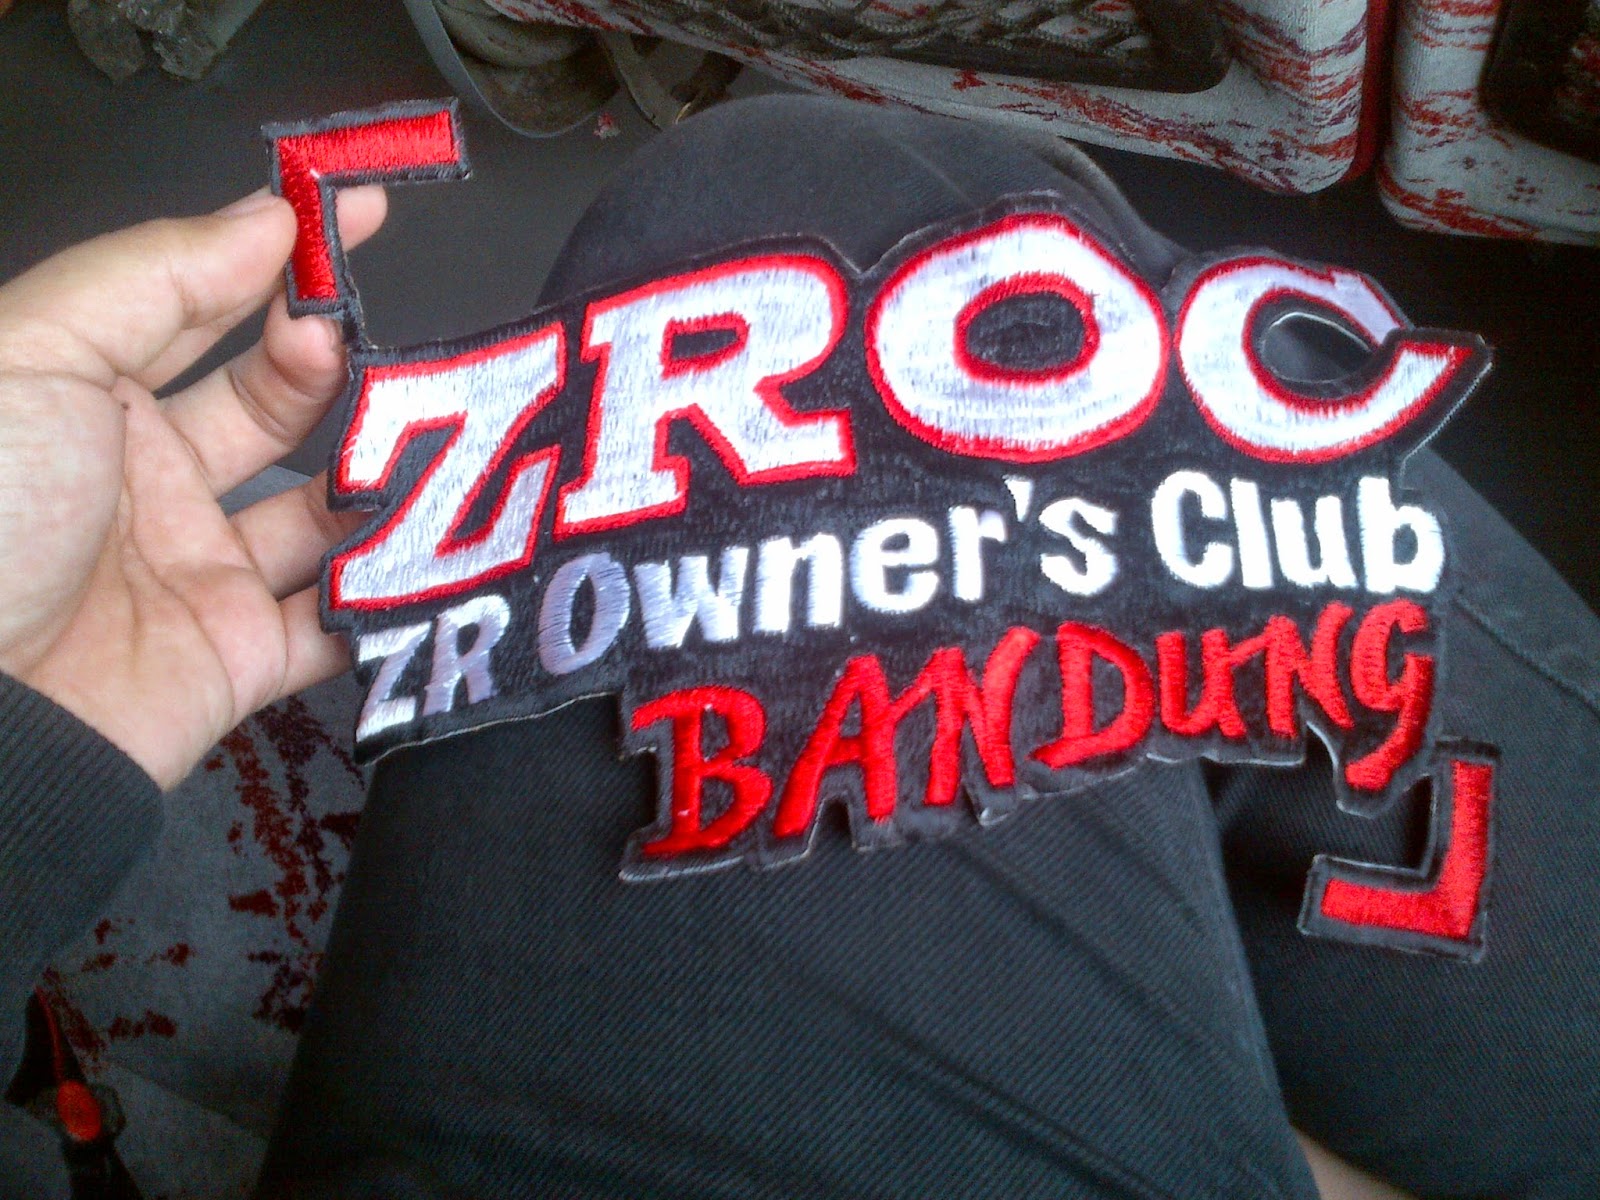 Modofikasi Vega ZR ZROC ZR Owners Club Chapter Bandung